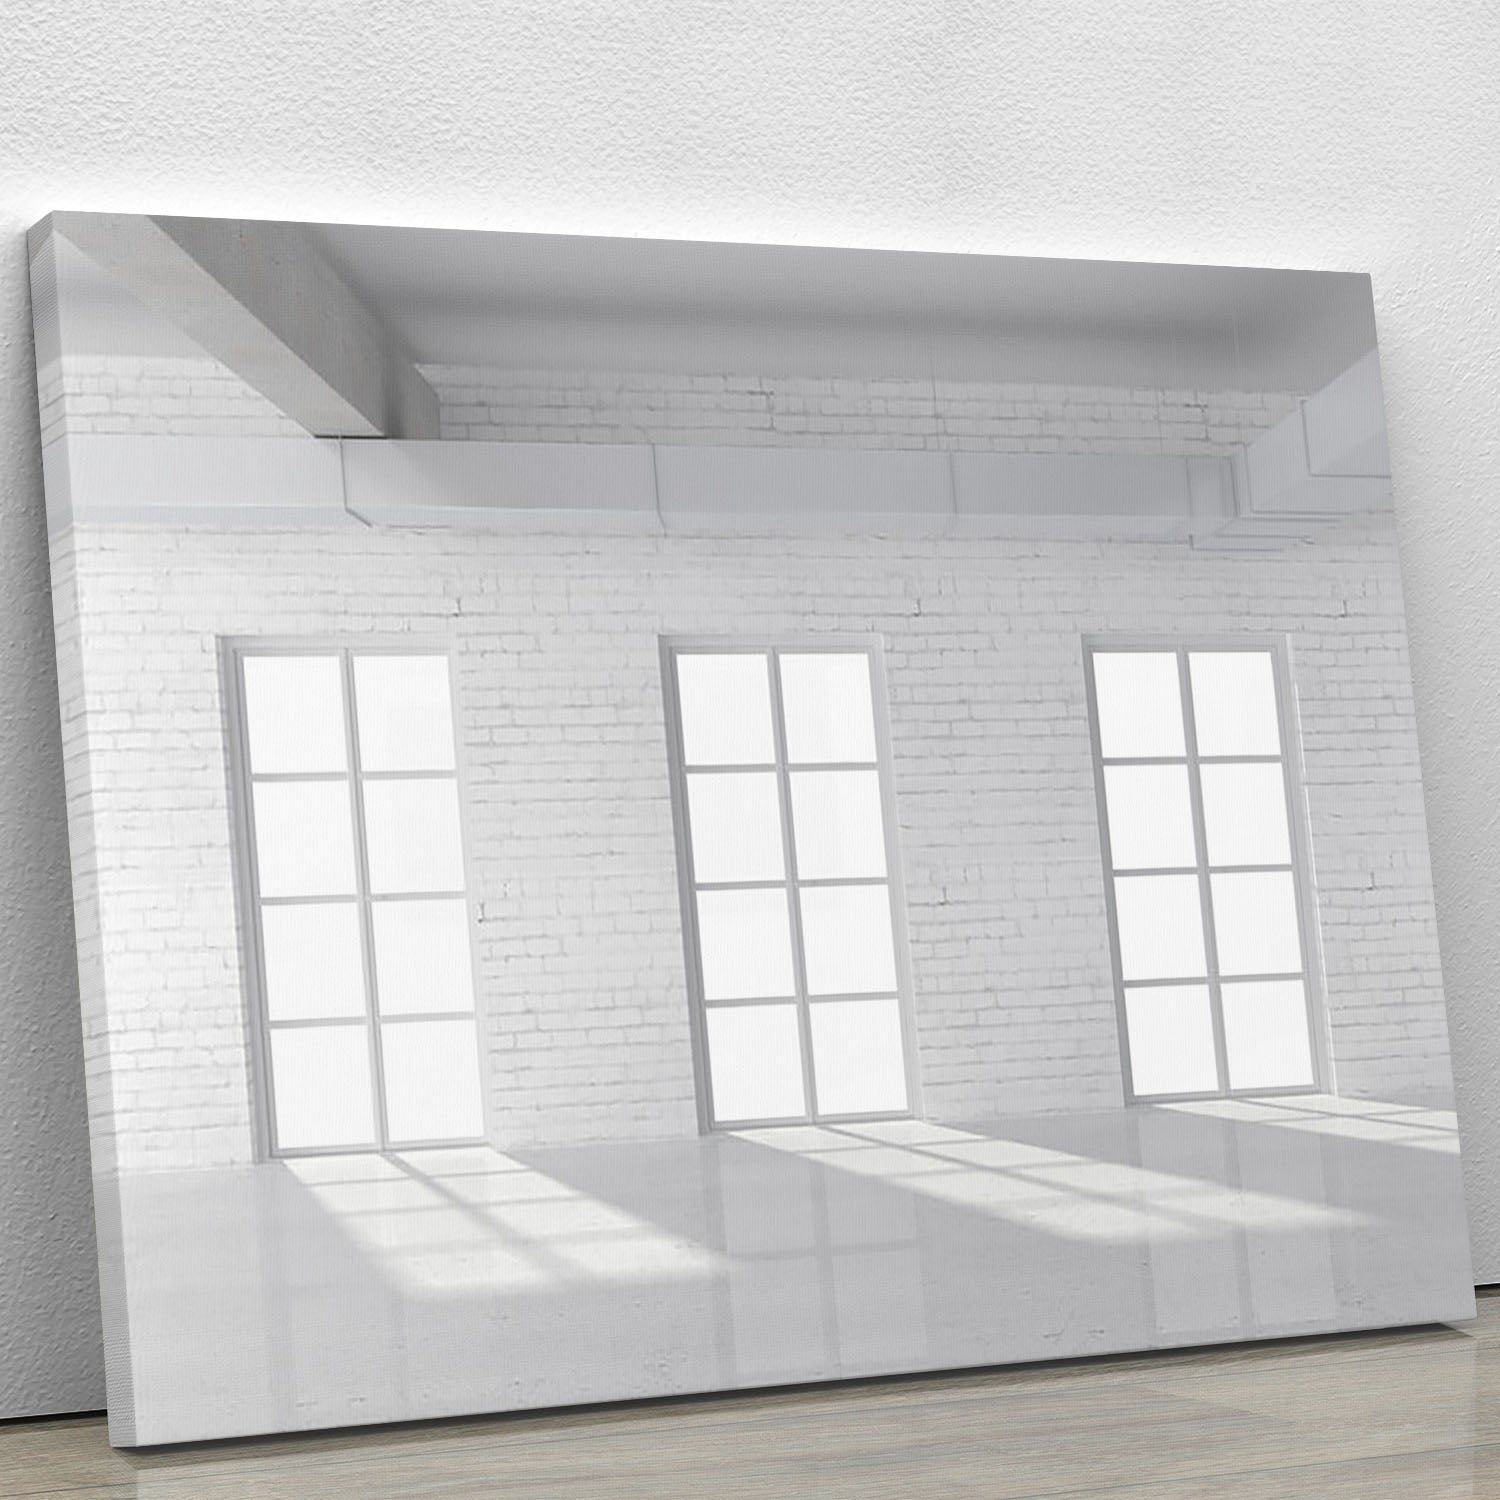 White brick loft with window Canvas Print or Poster - Canvas Art Rocks - 1